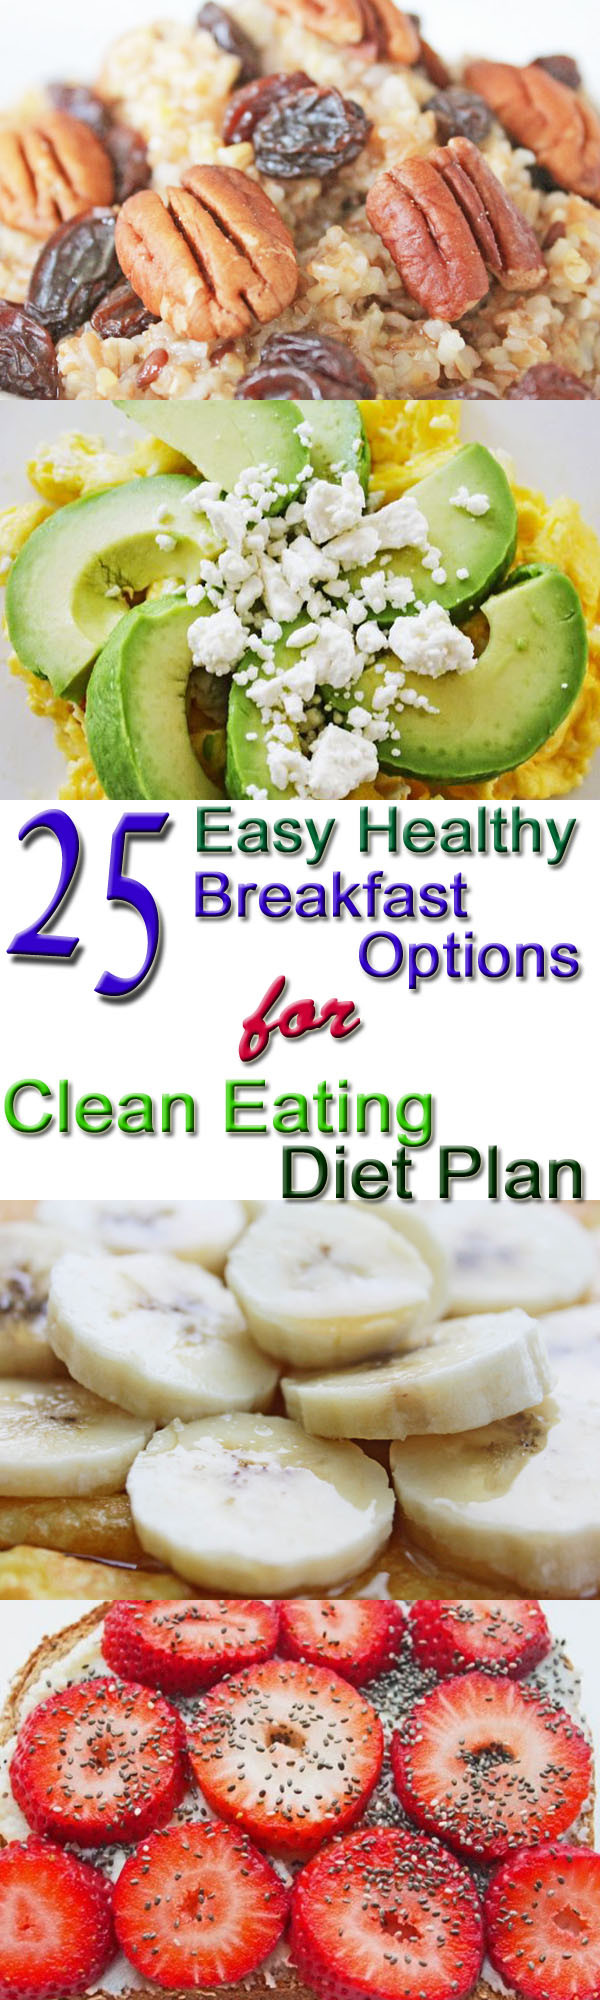 Clean Eating Recipes Breakfast
 25 Healthy Breakfast Options